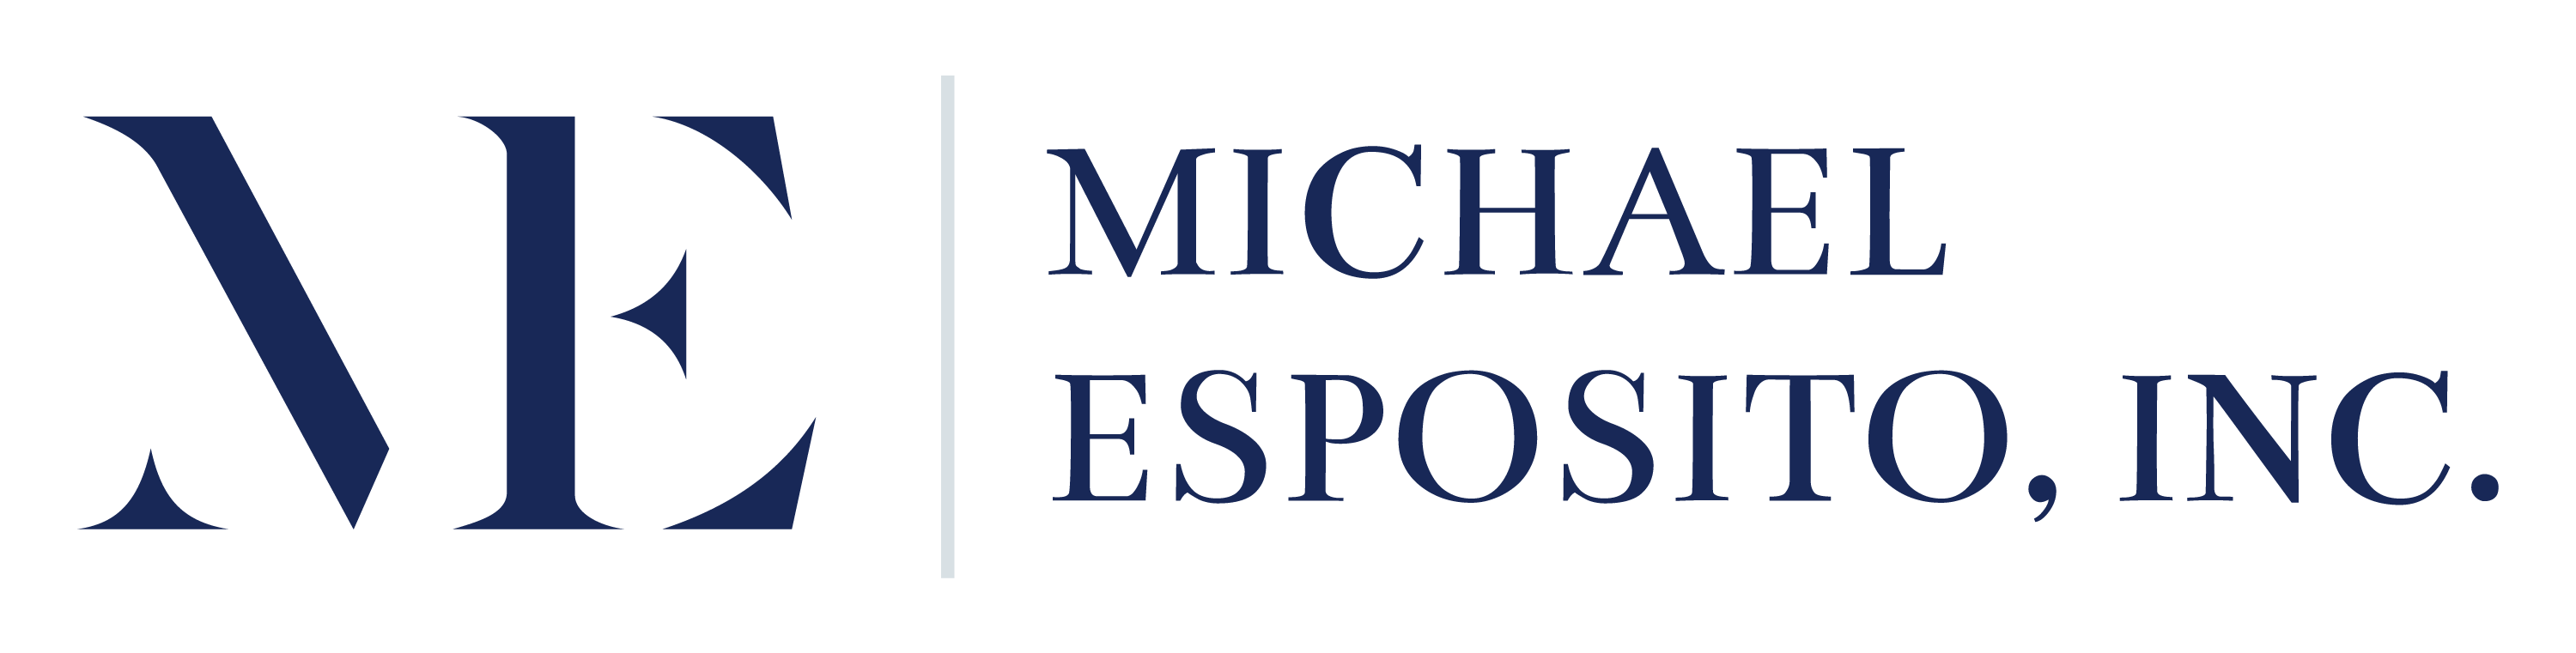 Michael Esposito, Inc. | Speak with Confidence, Inspire with Impact